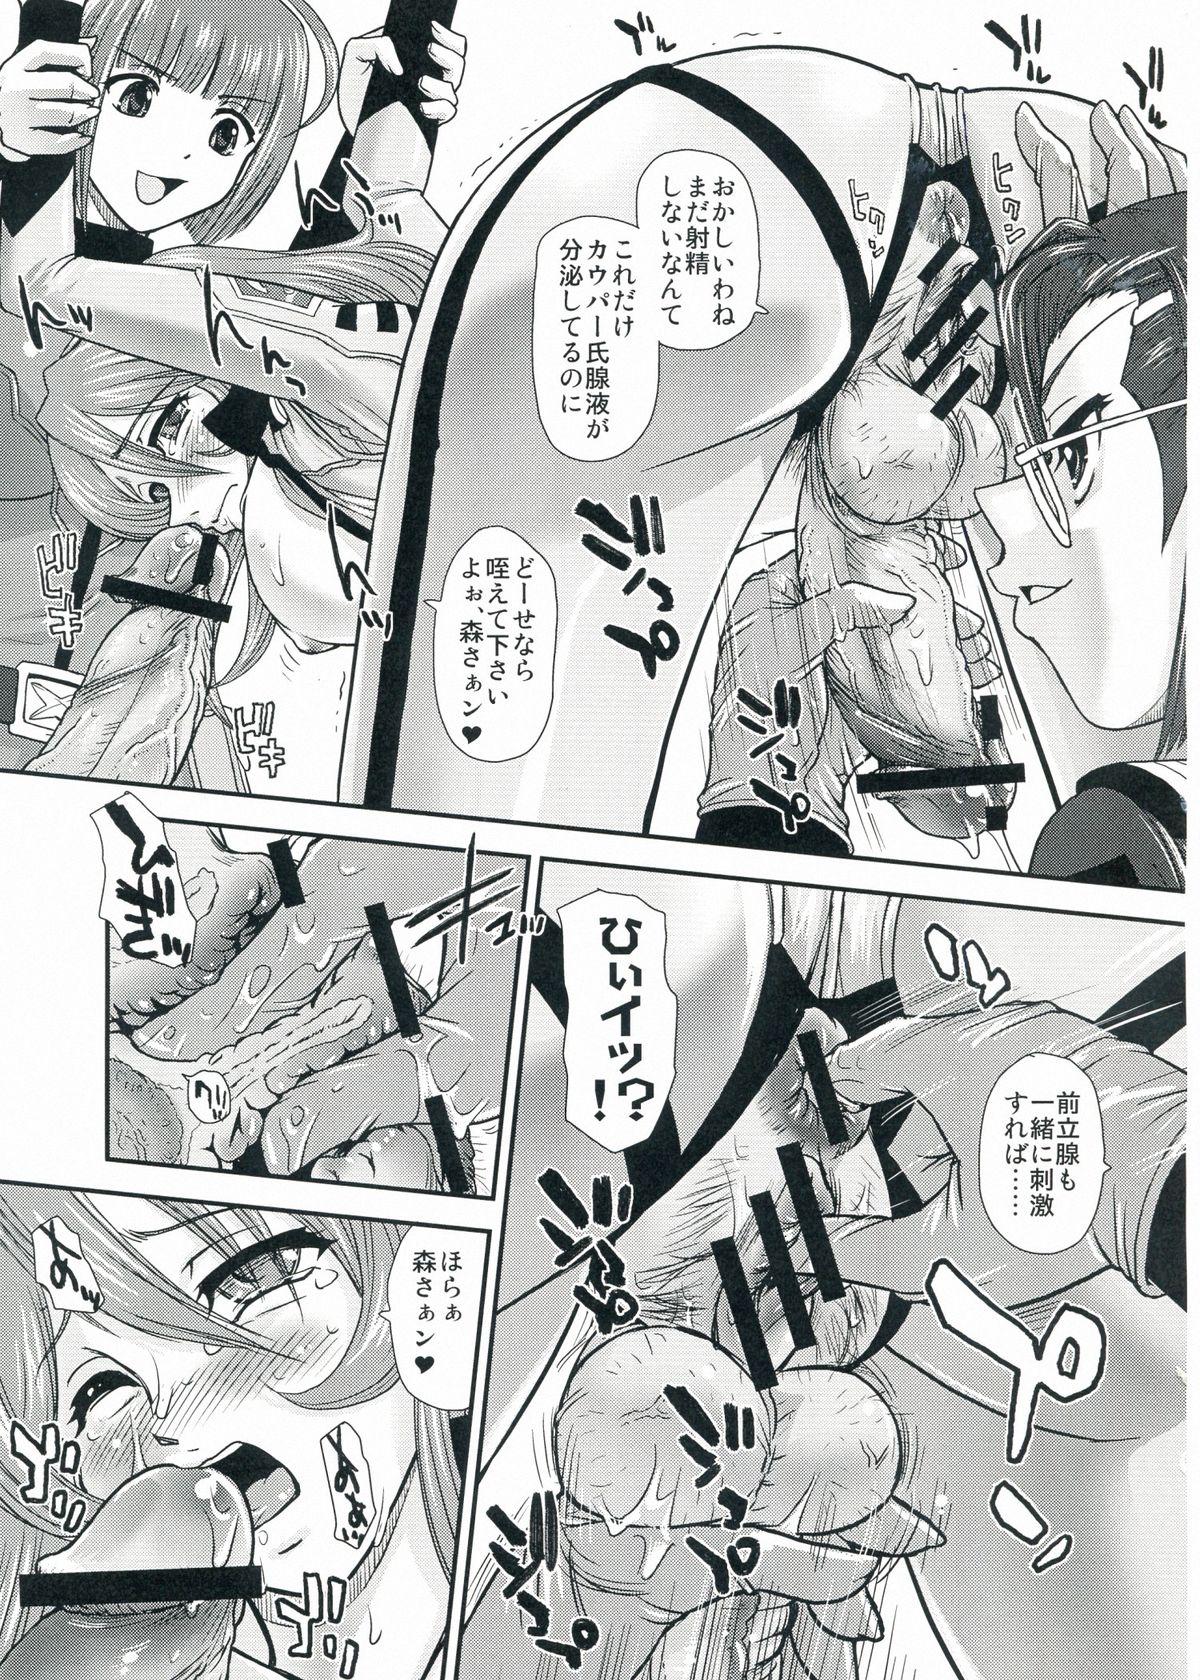 Couple Fucking YAMATO2199 Alternative - Space battleship yamato Slim - Page 9